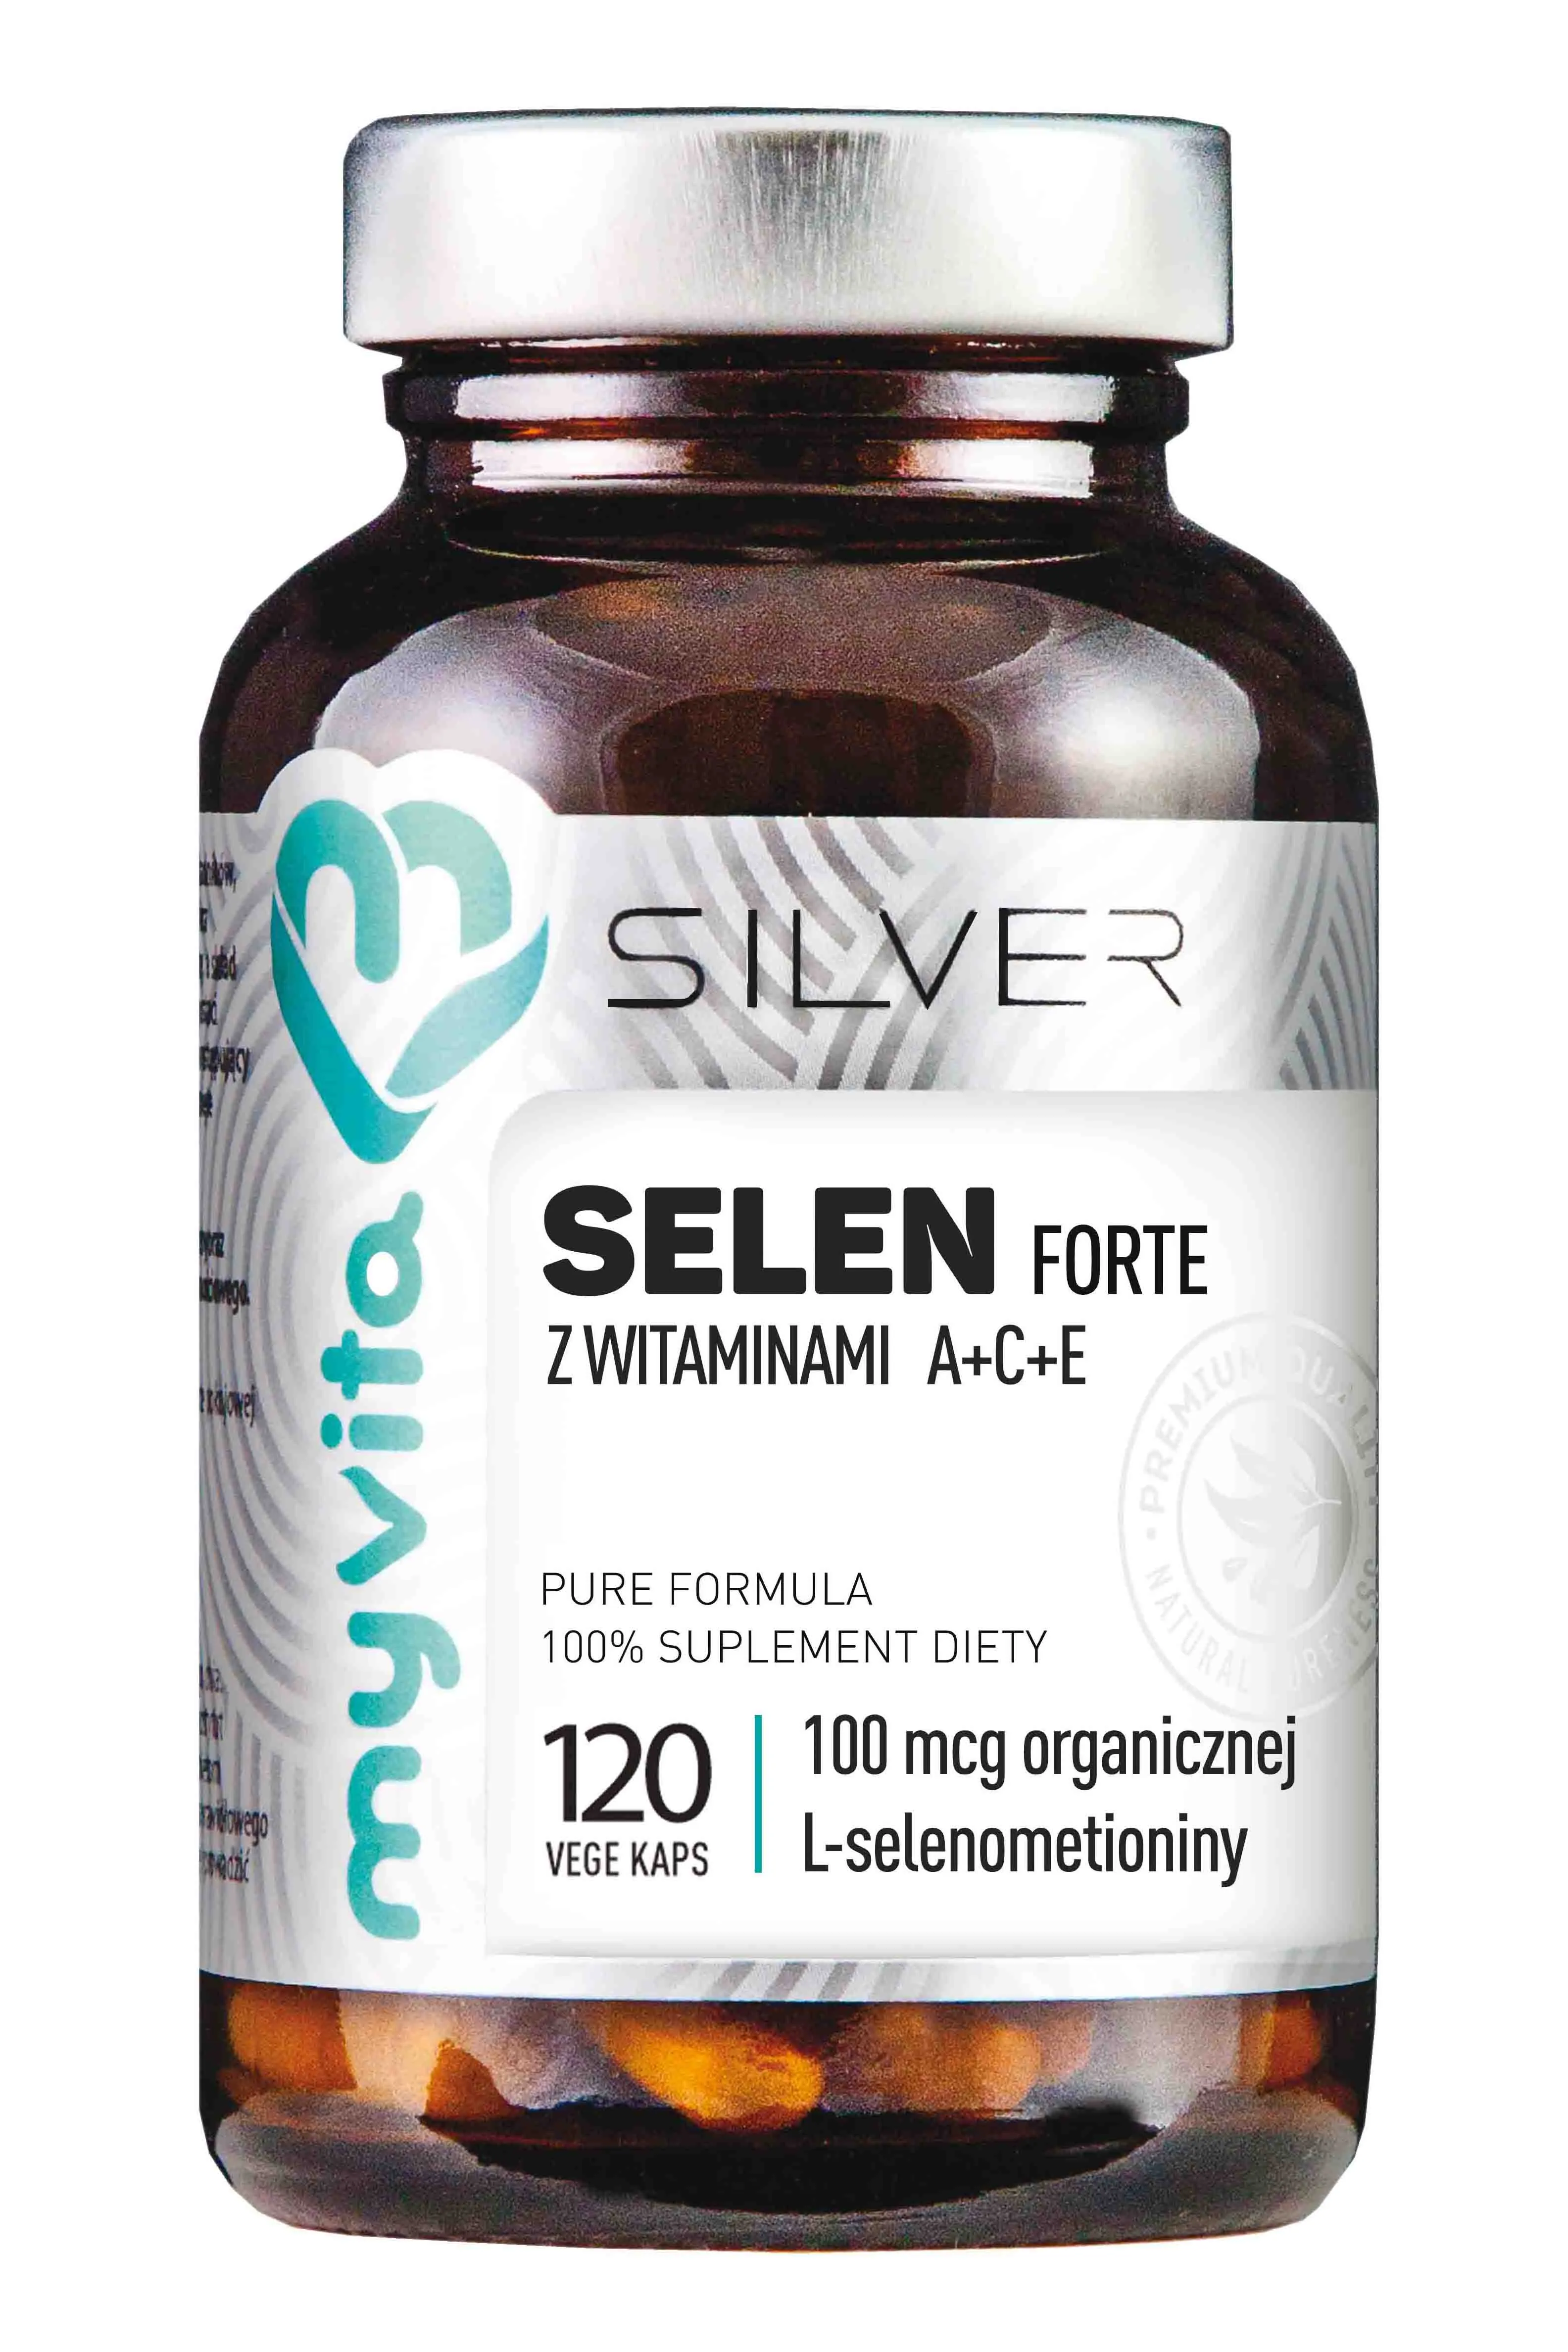 Myvita Silver, Selen forte (z witaminami a, c, e), suplement diety, 120 kapsułek